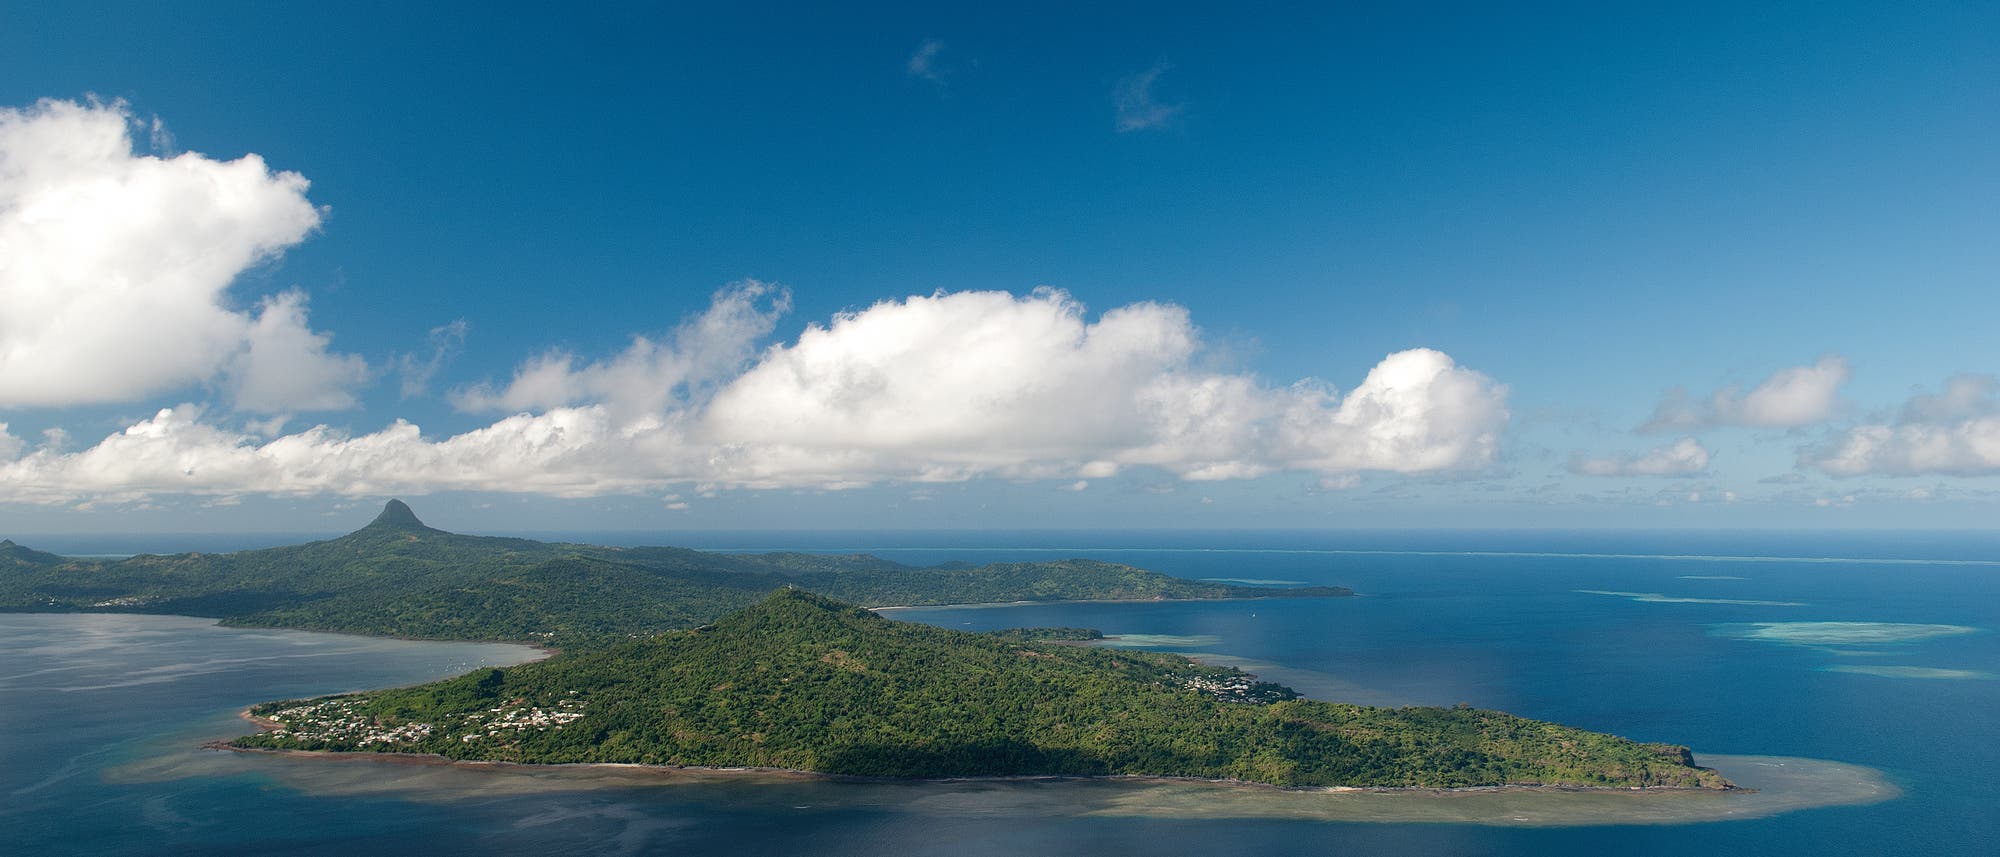 Blick auf die Komoreninsel Mayotte 